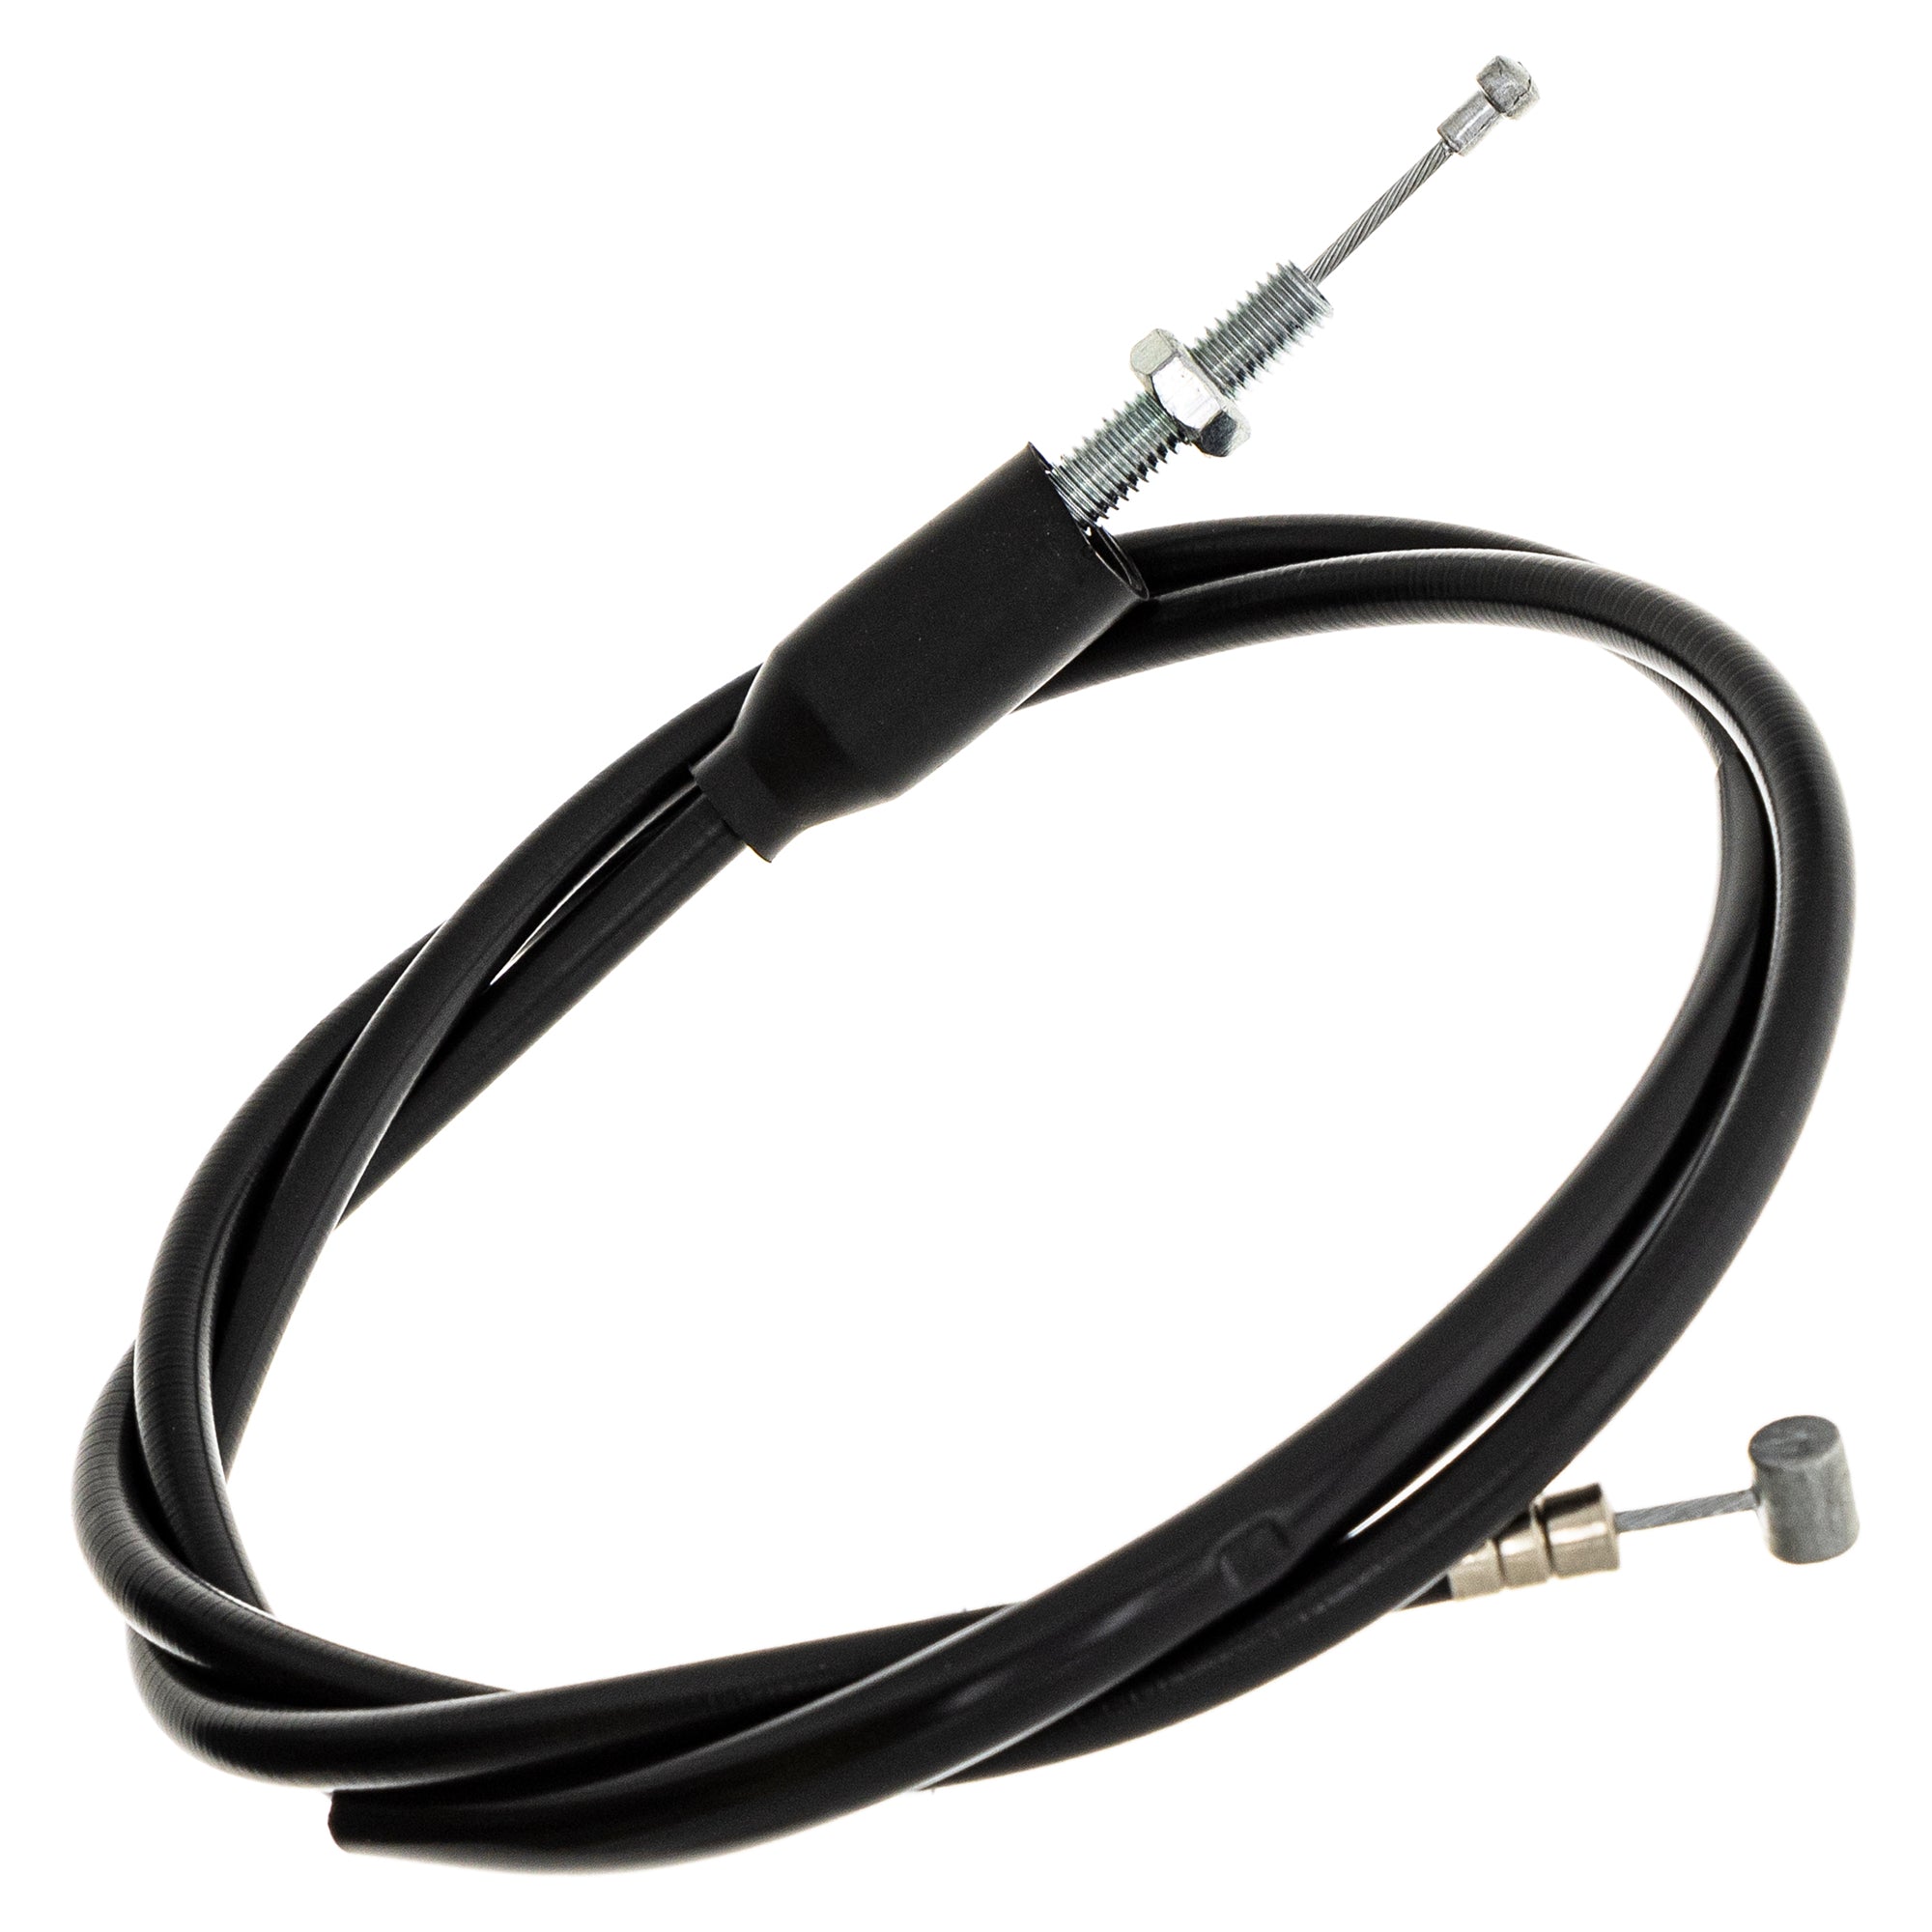 Clutch Cable For Suzuki 58200-45611 58200-45300 58200-45201 58200-45200